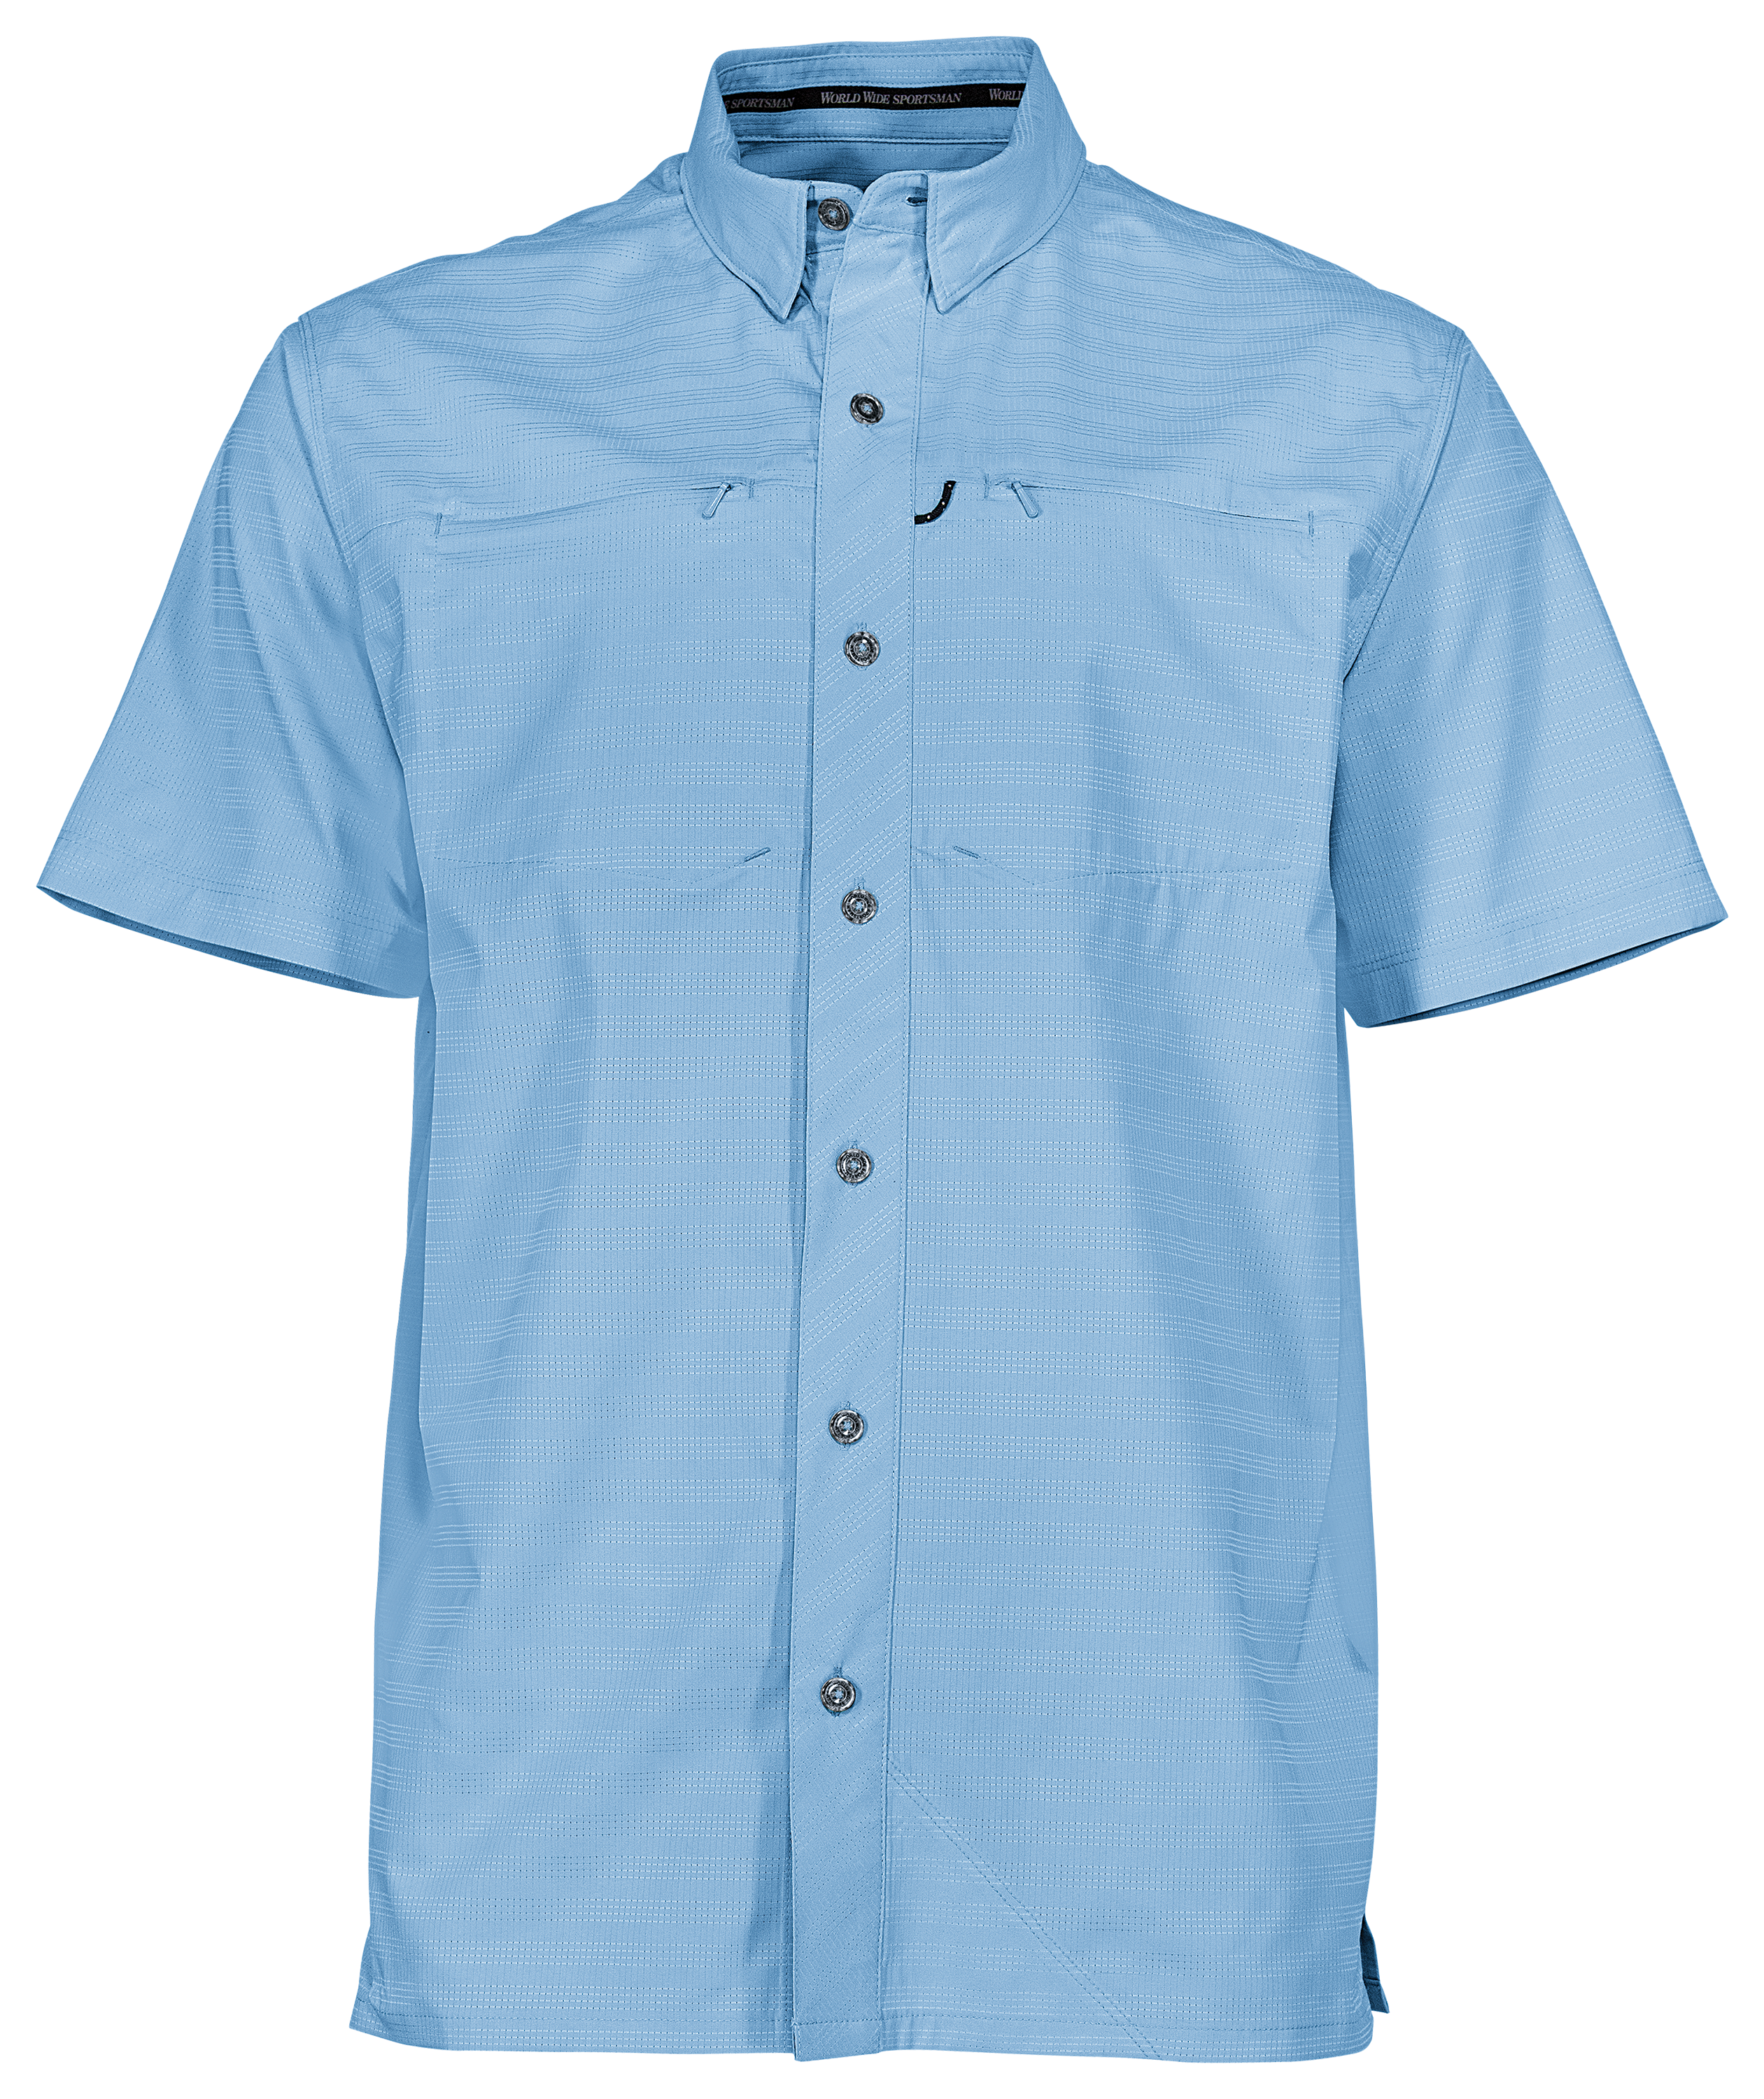 World Wide Sportsman Seacrest 2-Pocket Short-Sleeve Button-Down Shirt for Men - Placid Blue - S